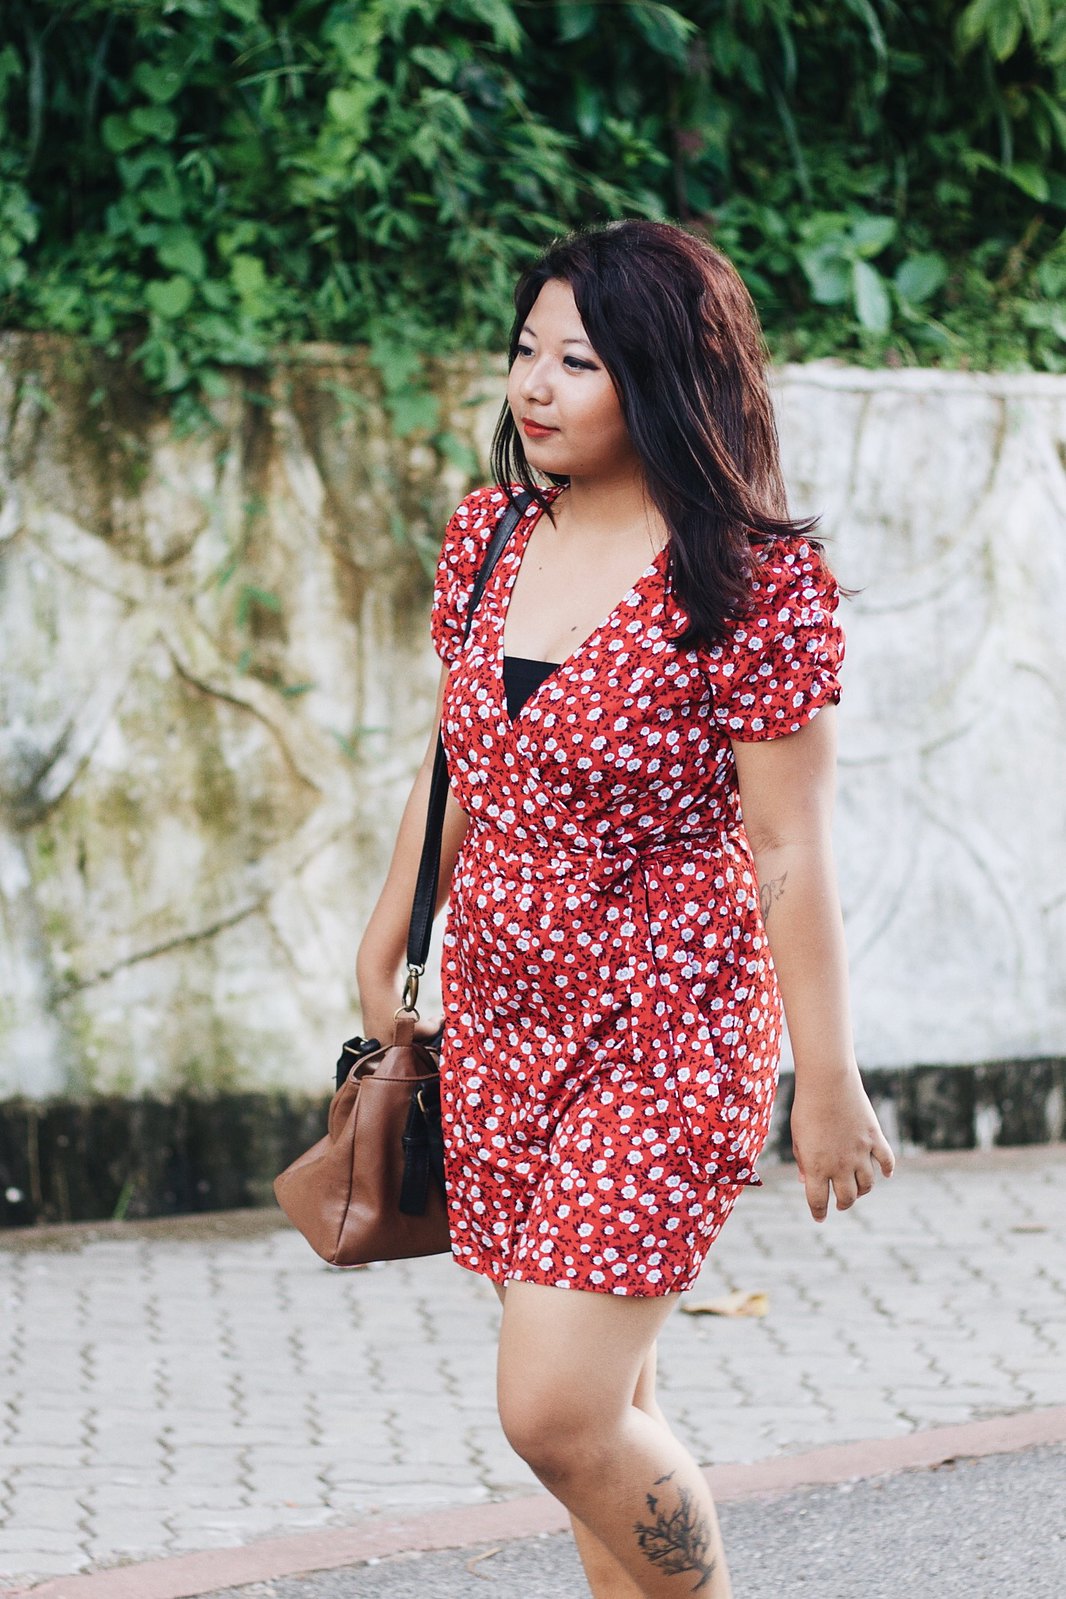 Selestyme by Chayanika Rabha Fashion blogger wearing Floral print dress via Flipkart Summer Fashion